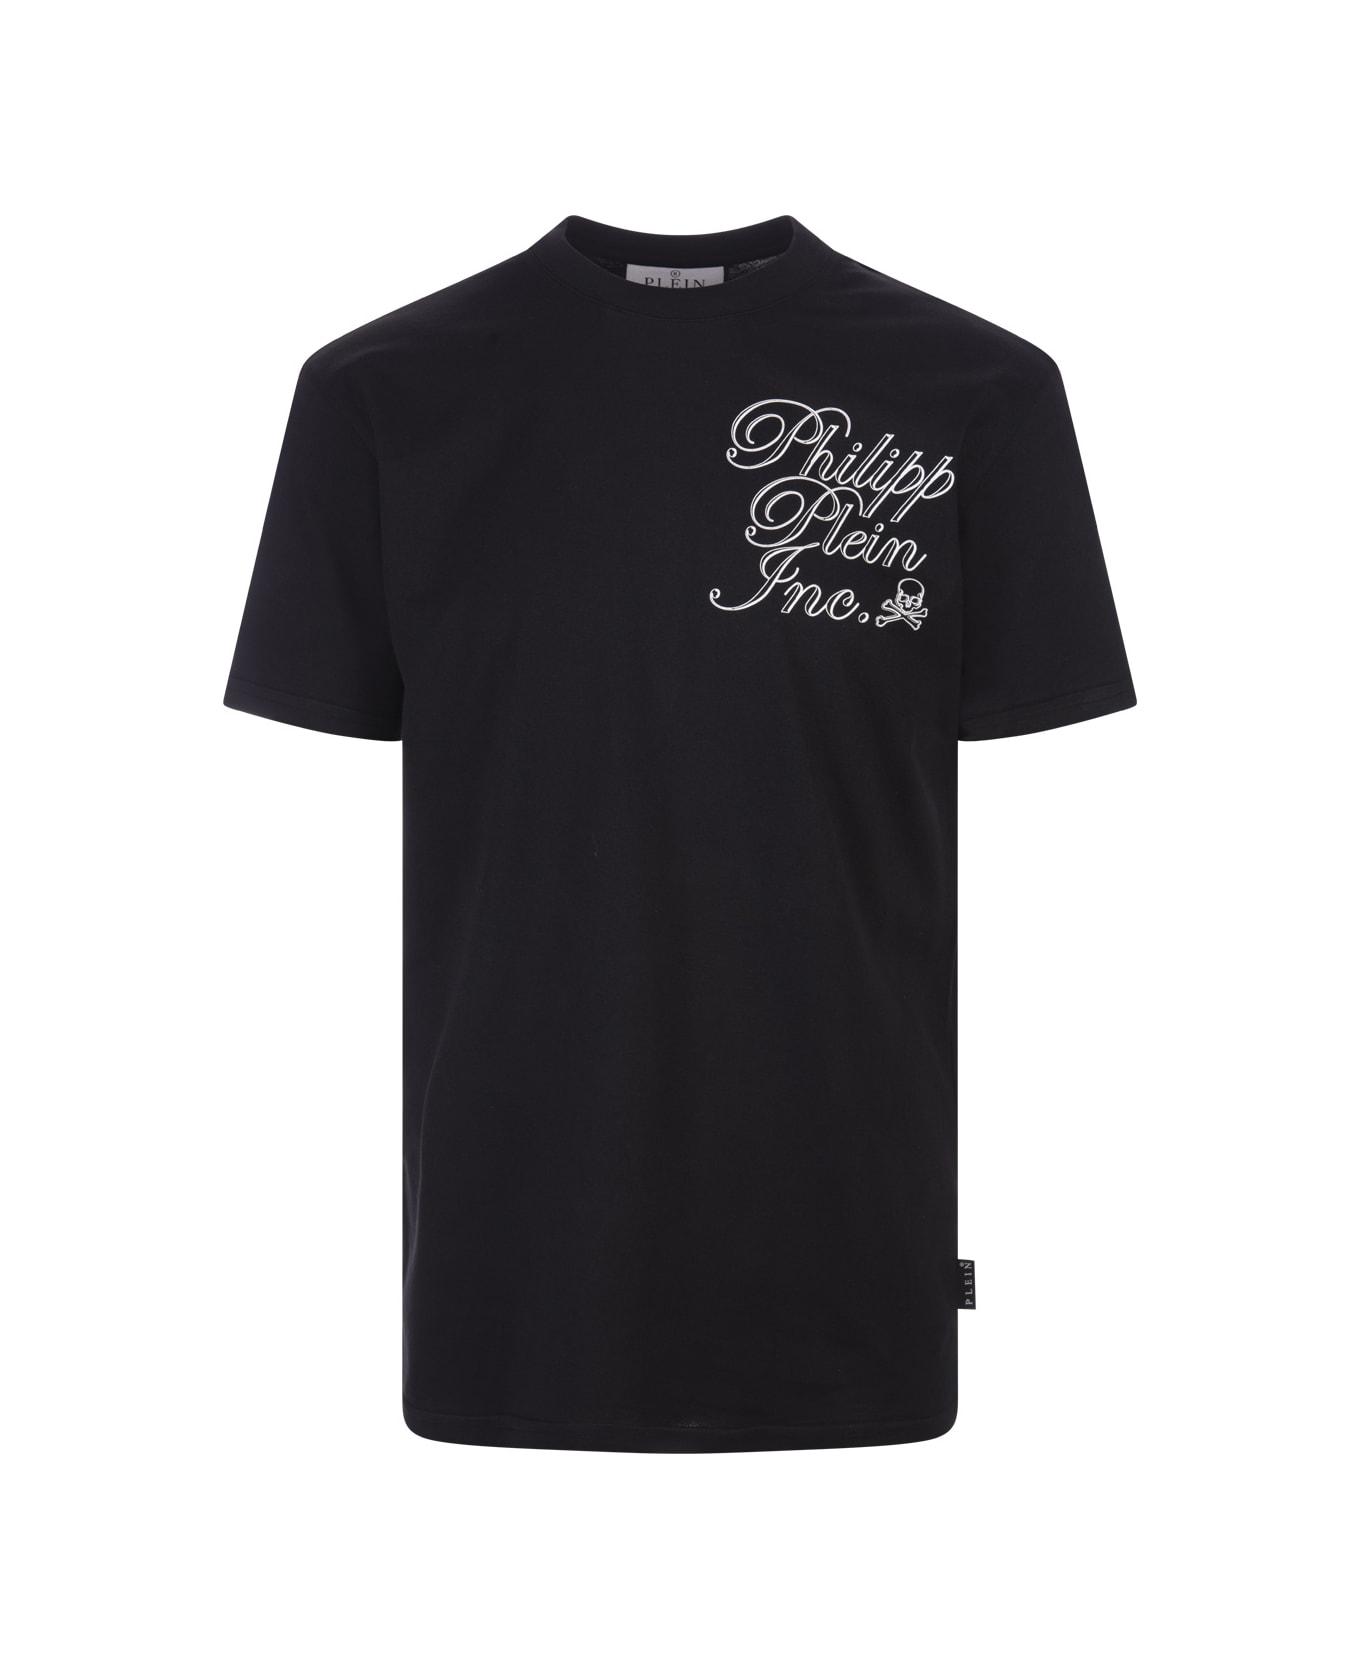 Philipp Plein Black T-shirt With Philipp Plein Tm Print On Front And Back - Black